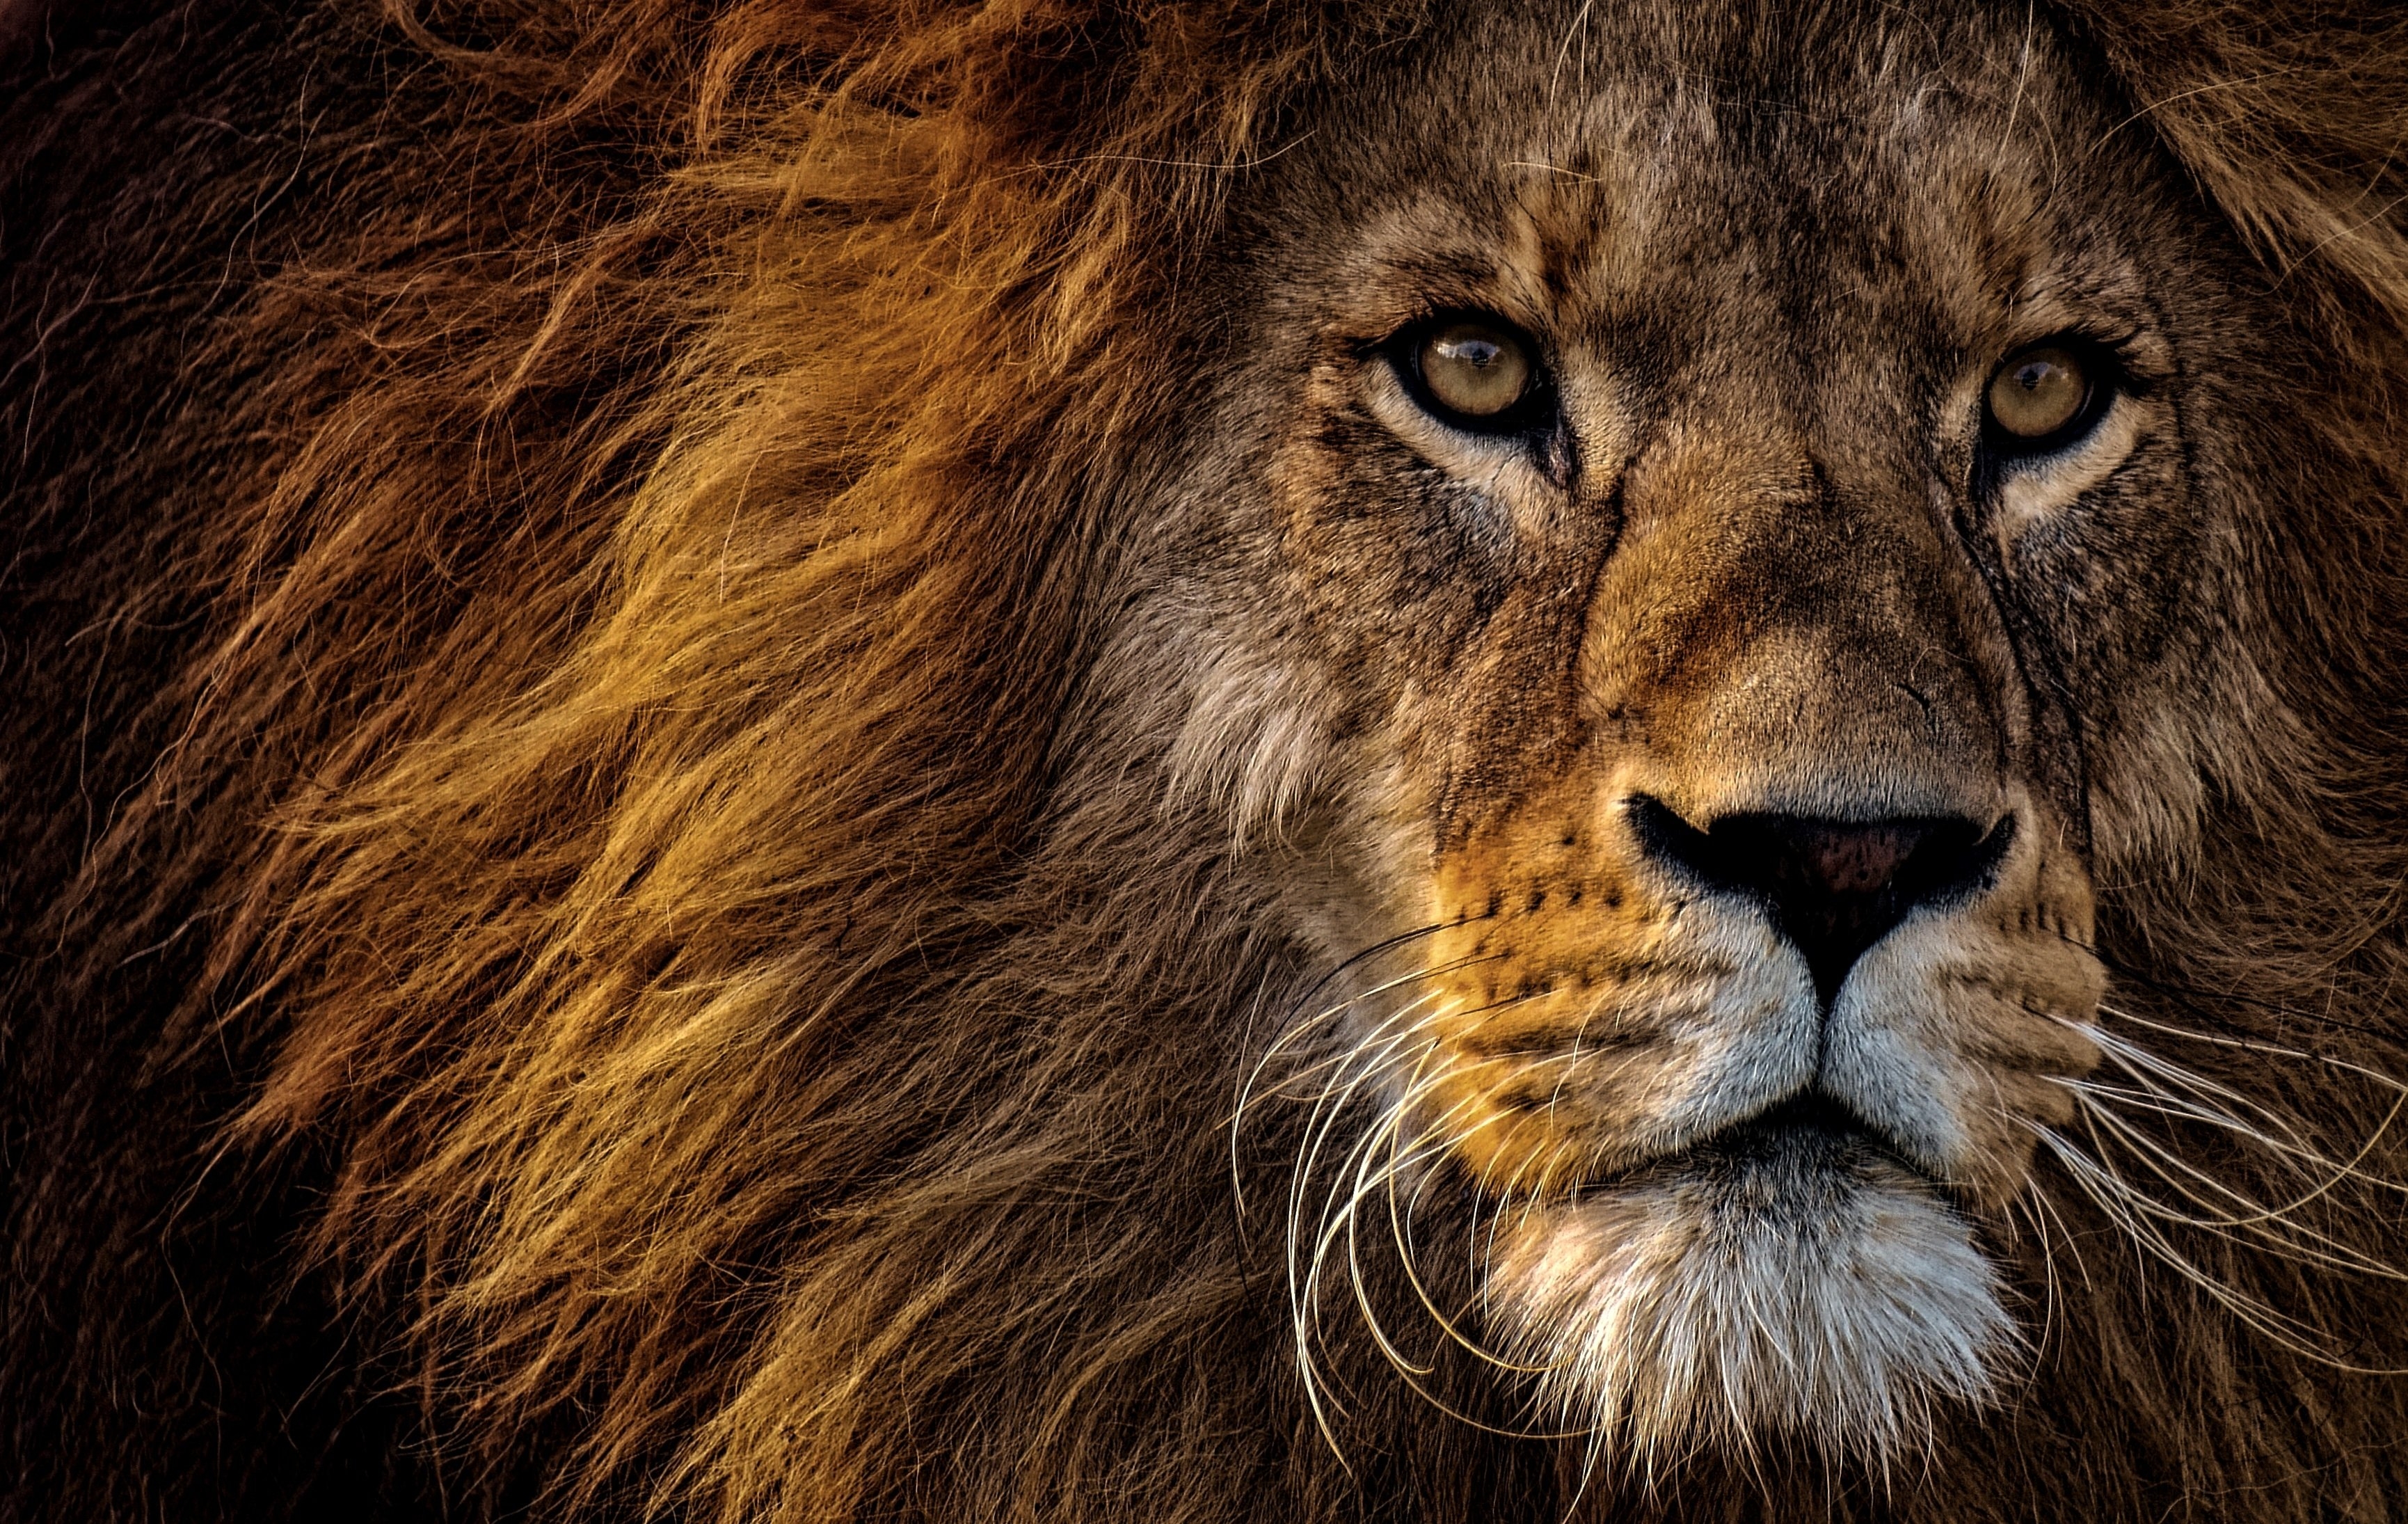 HD wallpaper, Predator, Big Cat, Dangerous, Portrait, Closeup, African Lion, Carnivore, Wild Animal